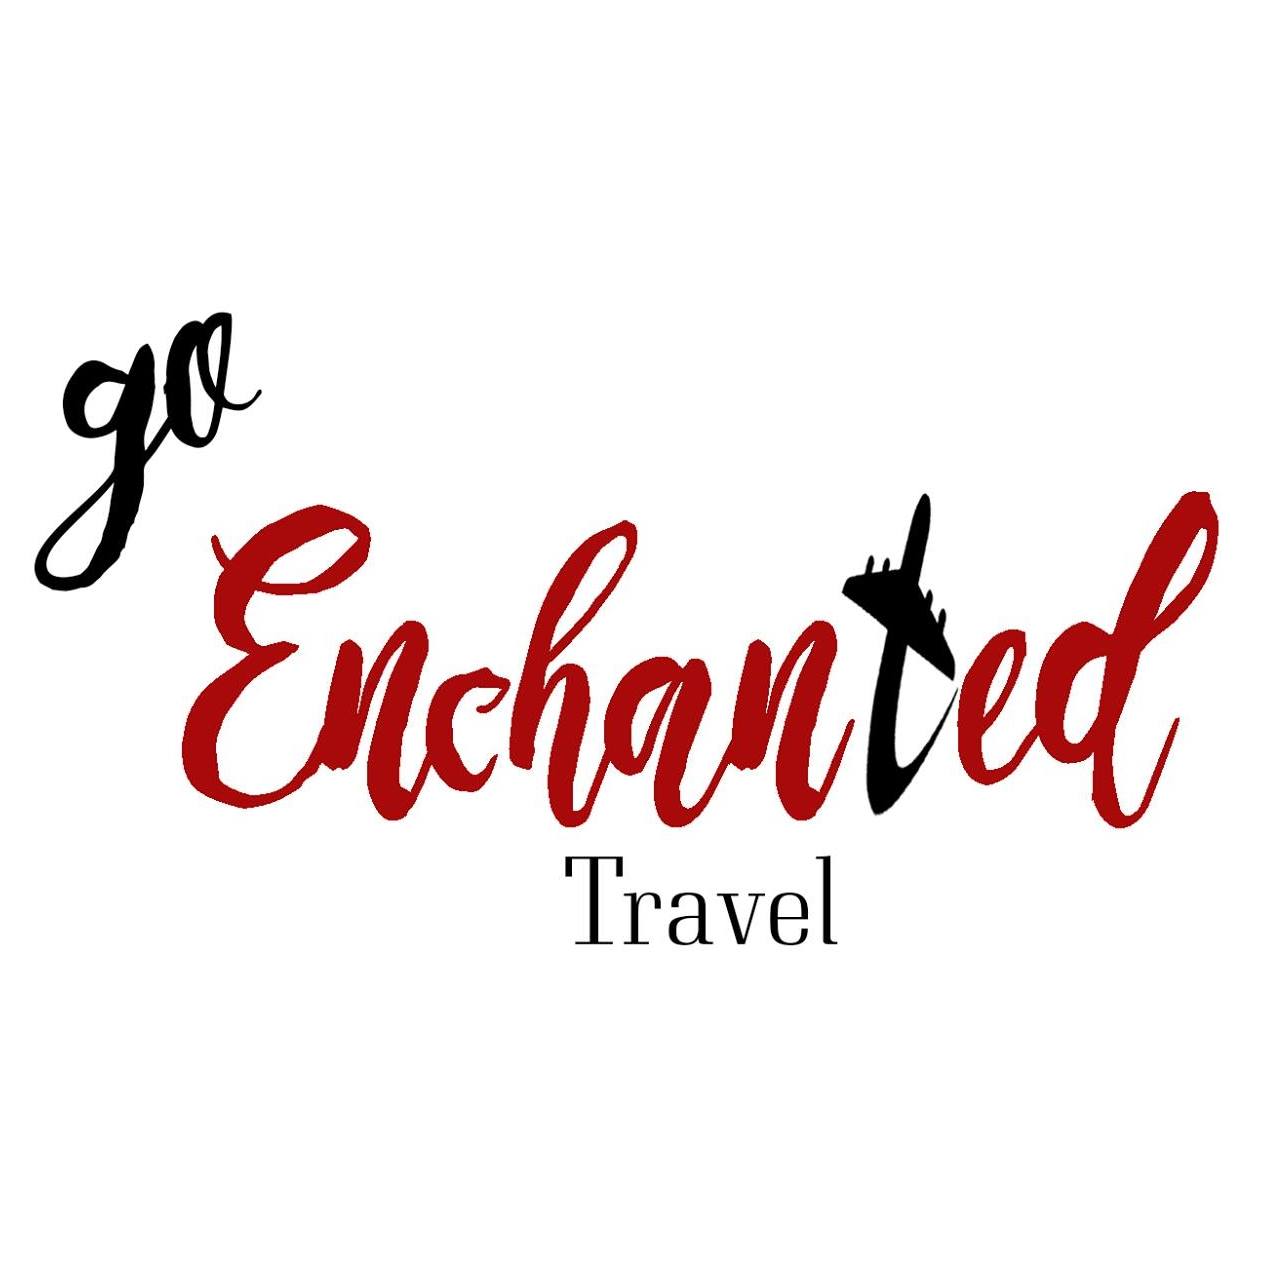 Go Enchanted Travel